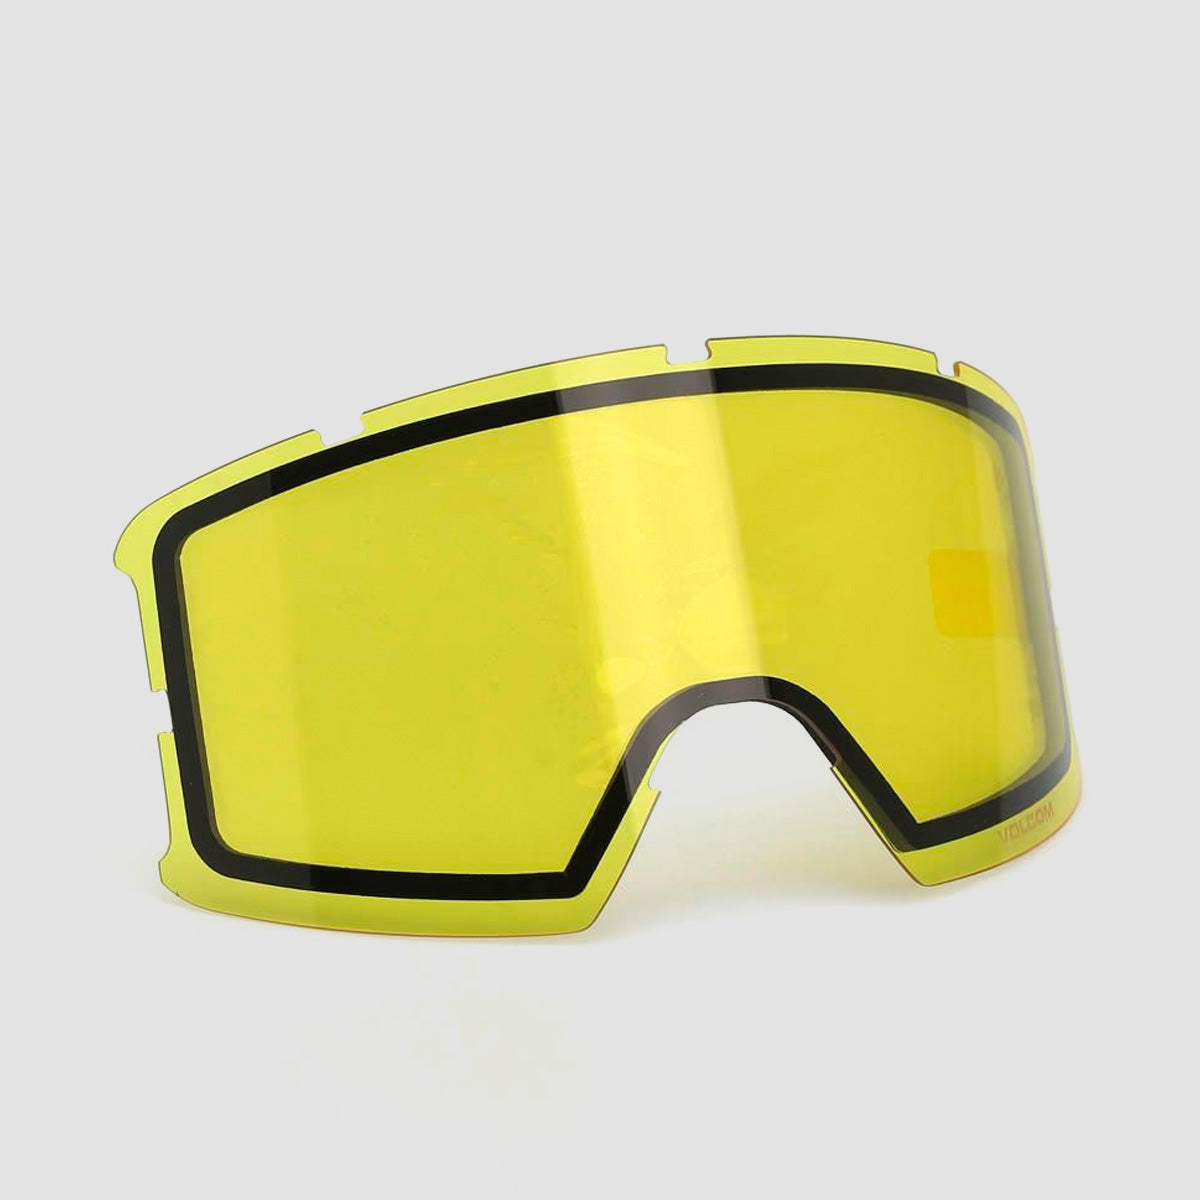 Volcom Garden Snow Goggles Matte White/Pink Chrome + Bonus Lens Yellow